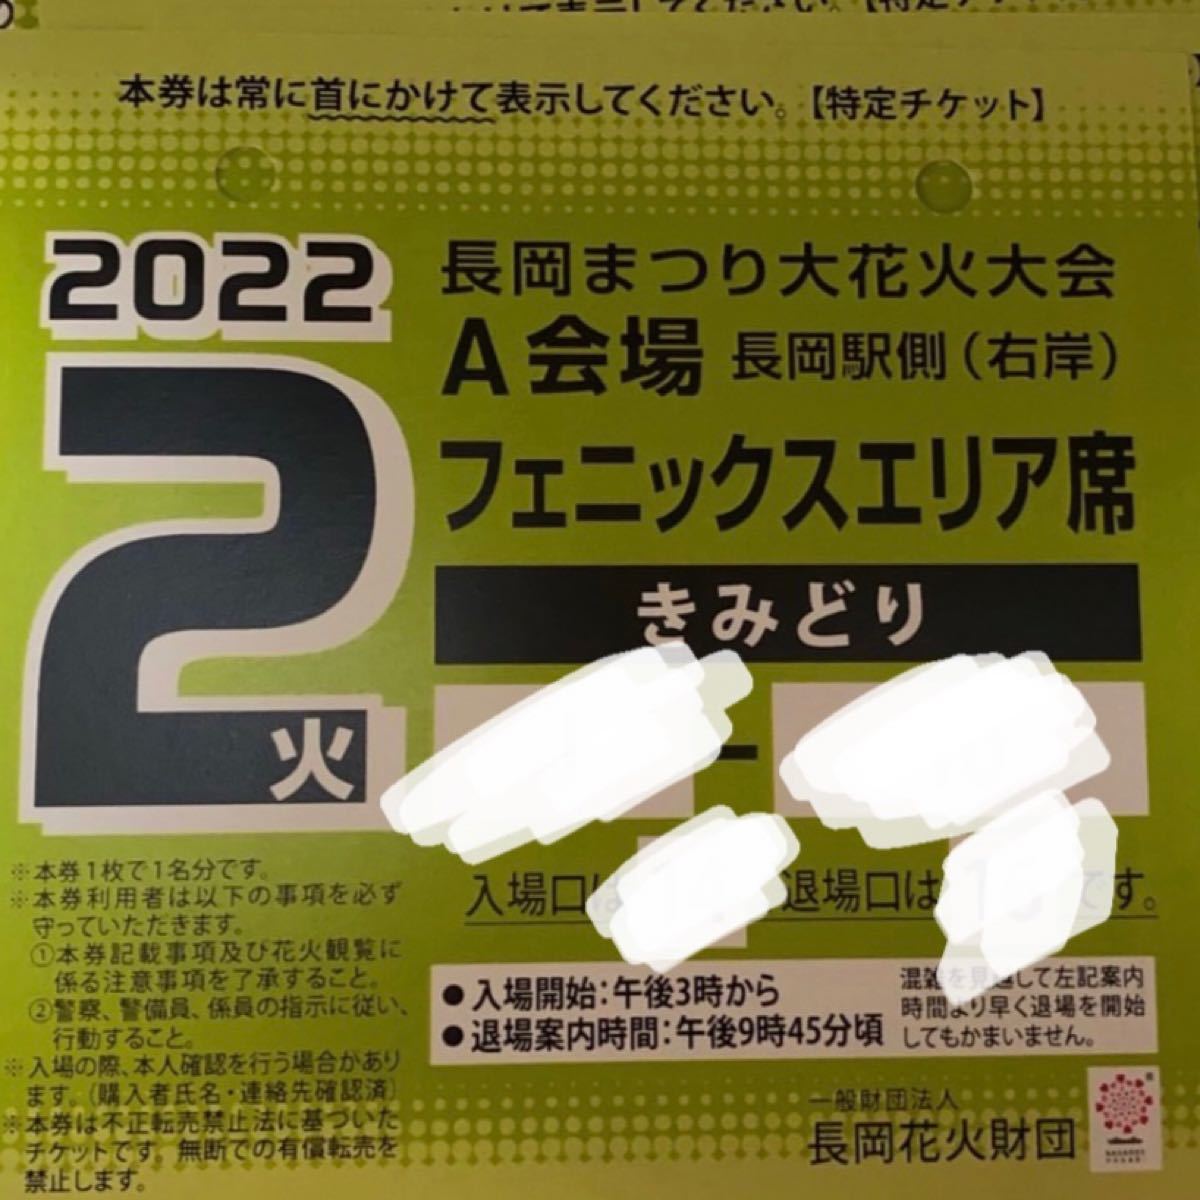 長岡花火大会2022 www.danitex.com.br